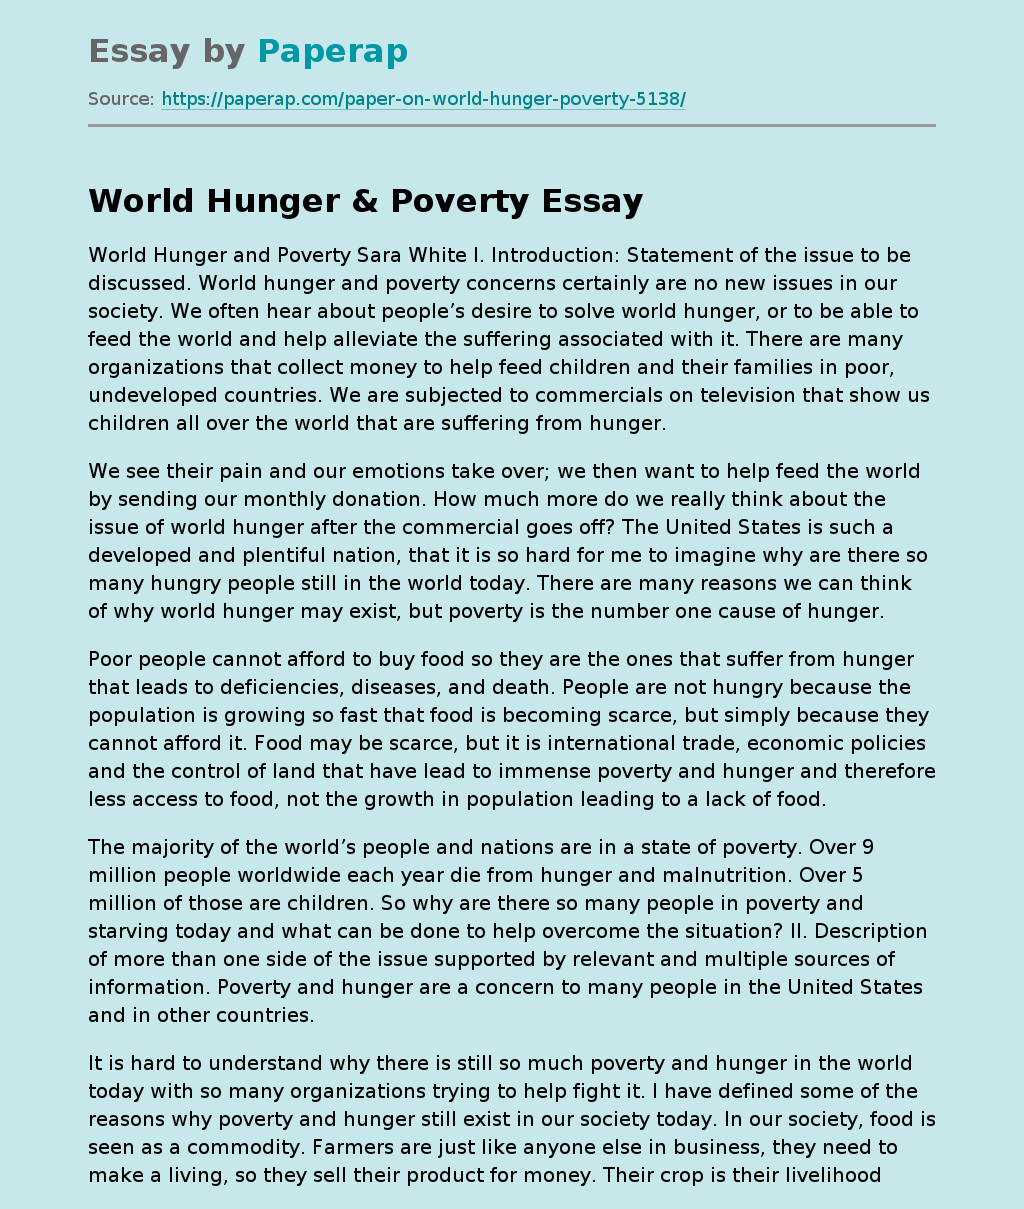 World Hunger & Poverty